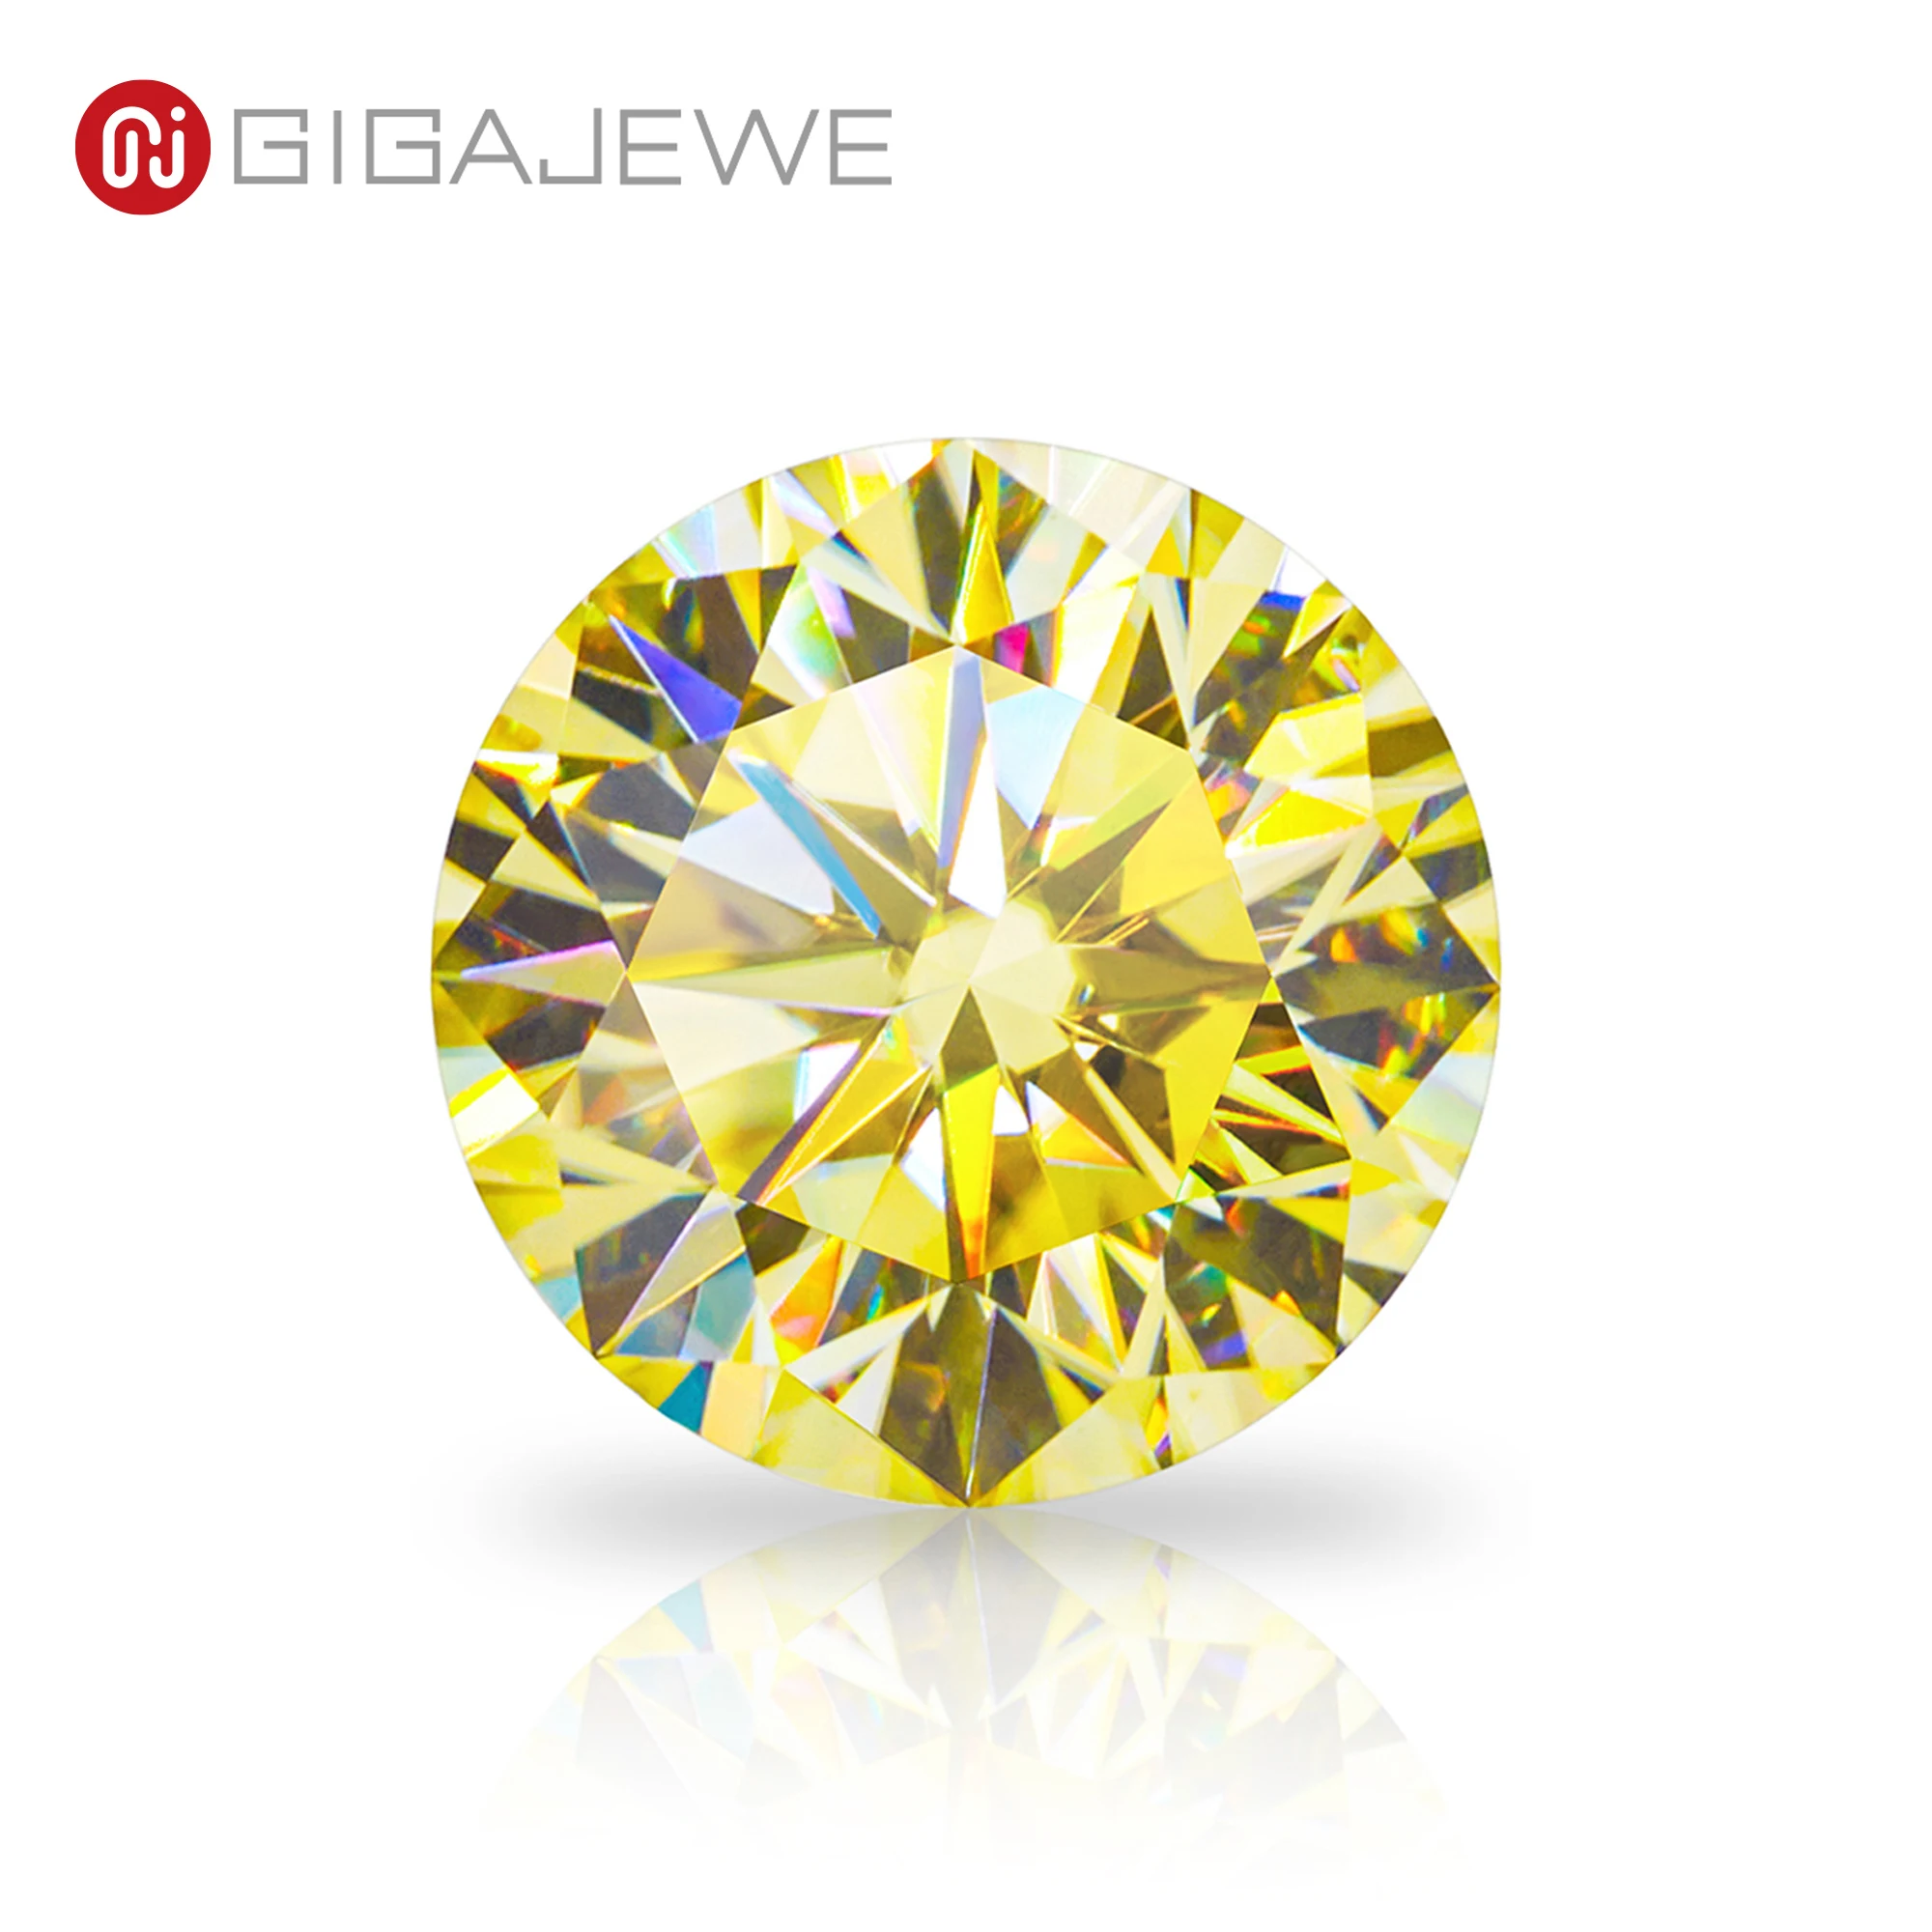 GIGAJEWE Moissanite Customized Round Cut Vivid Yellow VVS1 Natural Growt Loose Diamond Test Passed Gemstone For Jewelry Making